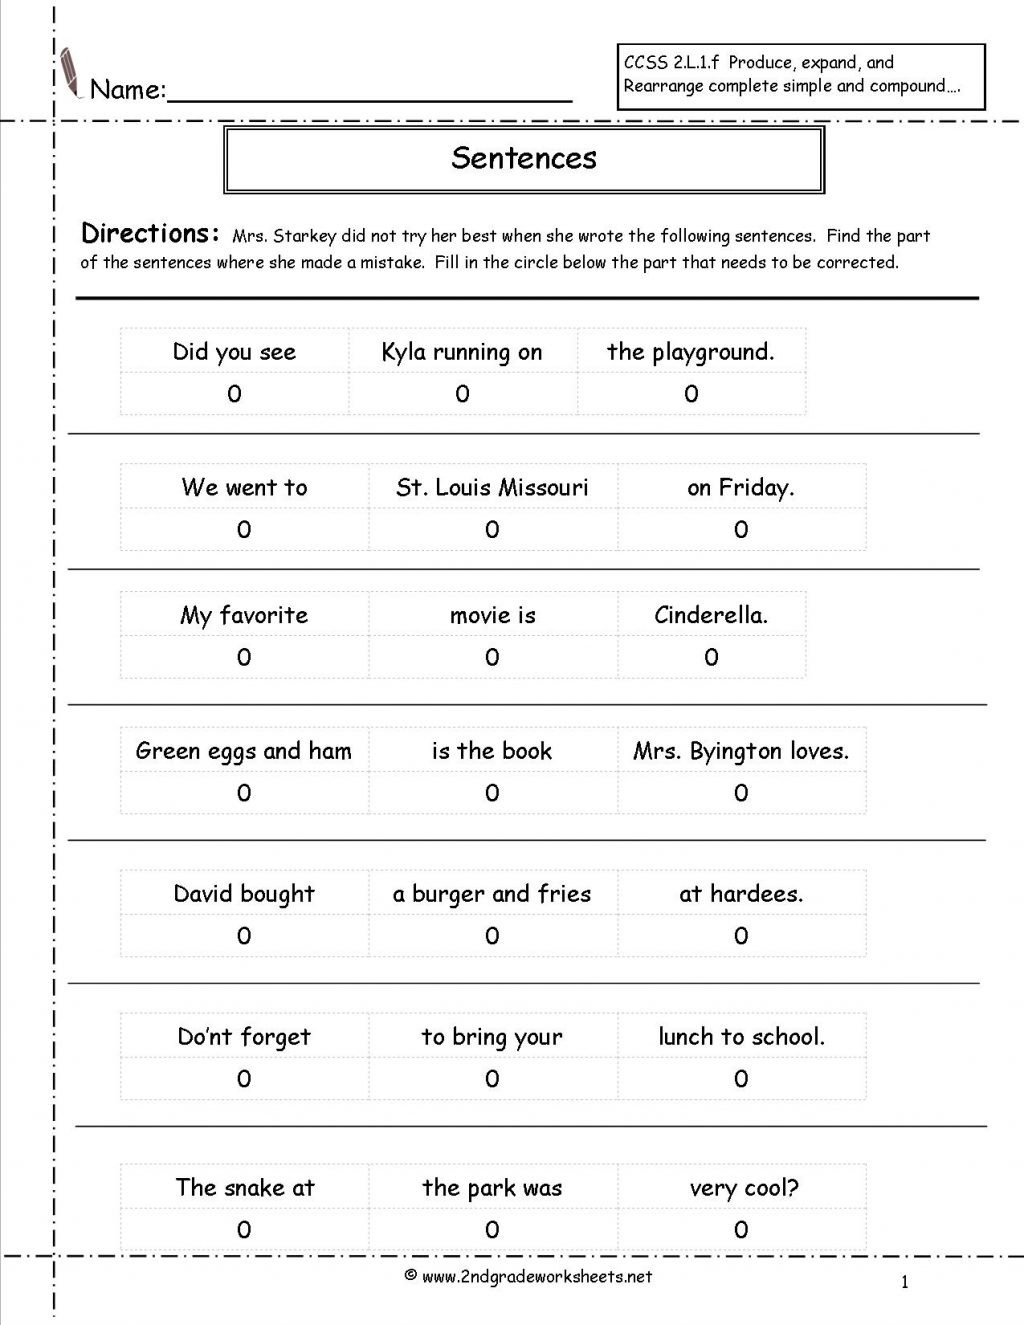 sentence-correction-worksheets-db-excel